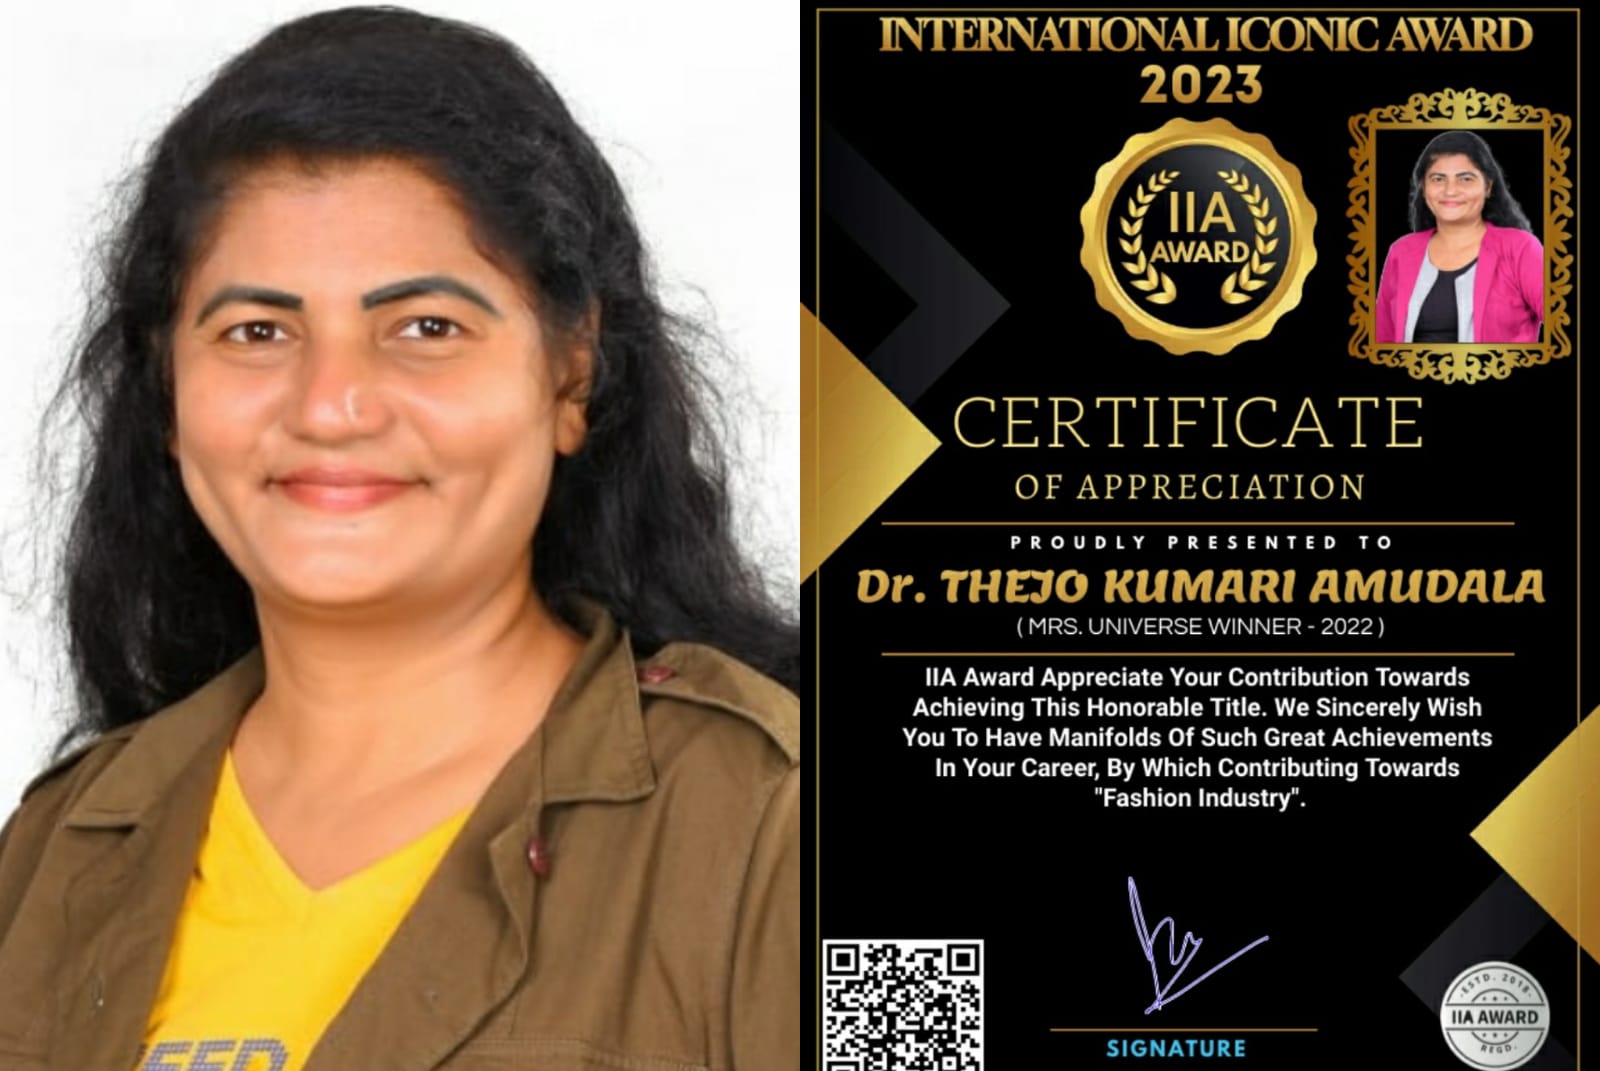 Mrs. Universe 2022 Dr. Thejo Kumari Amudala Bestowed With Prestigious International Iconic Award 2023